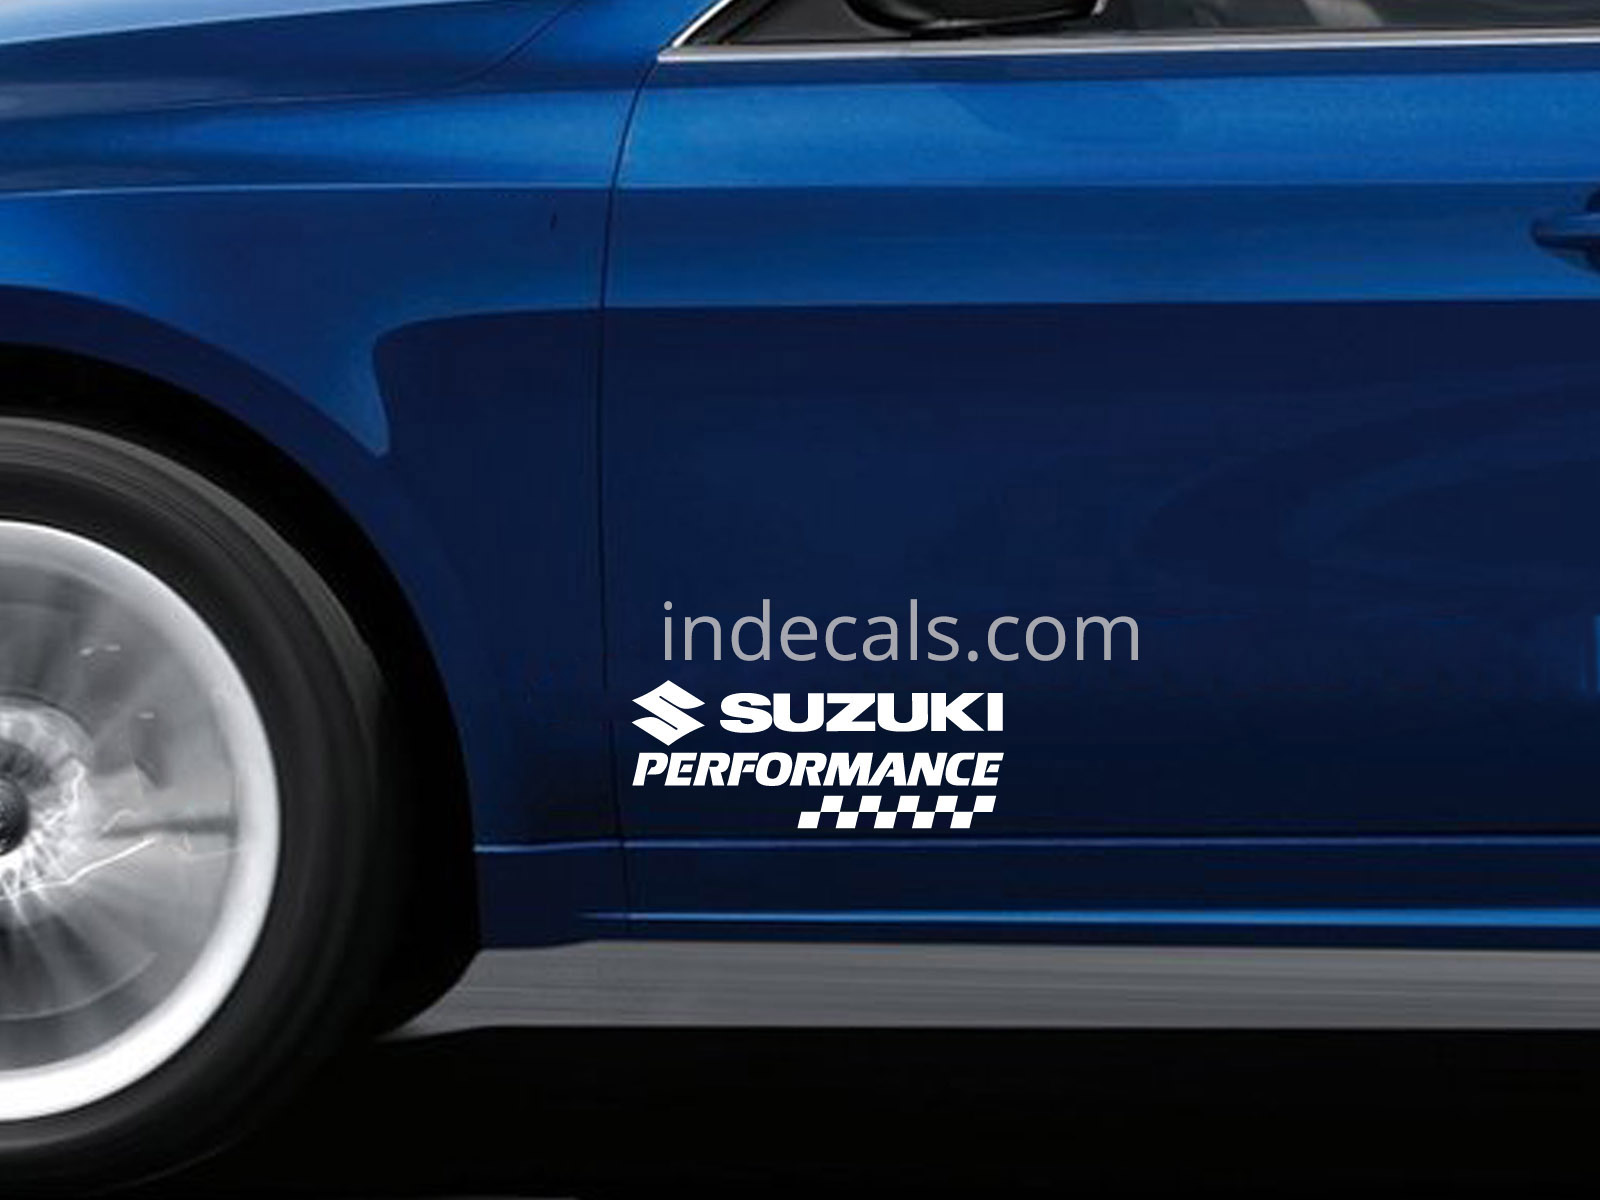 2 x Suzuki Performance Stickers for Doors - White